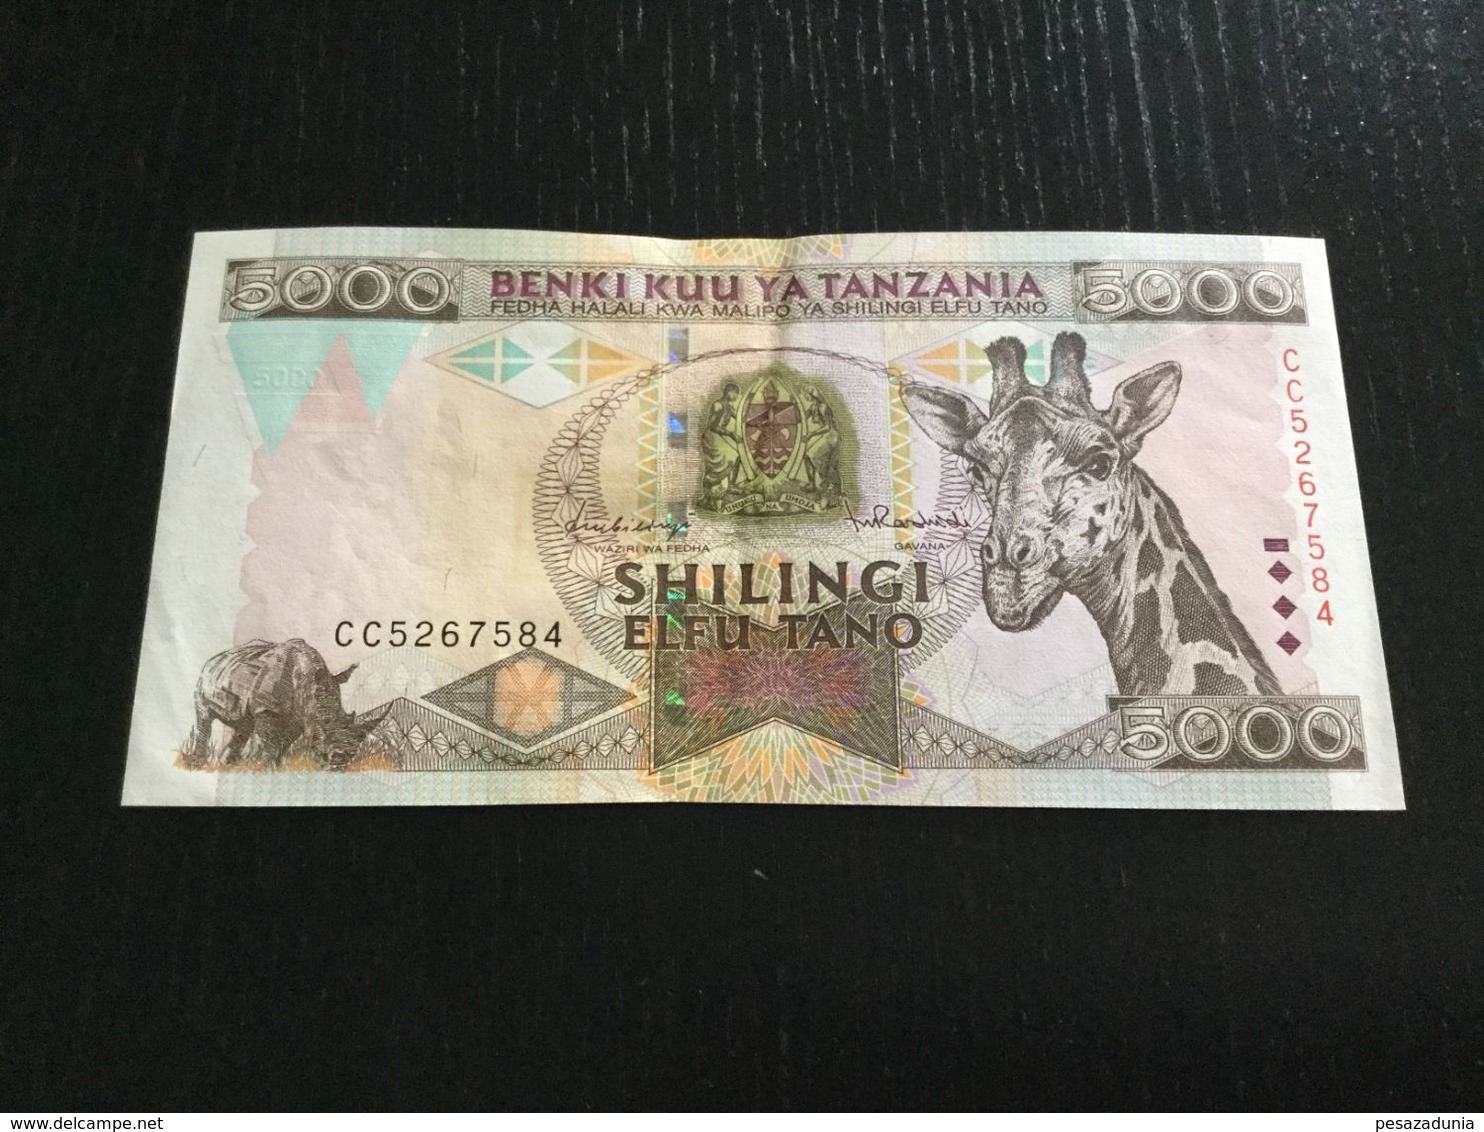 TANZANIA 5000 SHILLINGS BANKNOTE (1997) P-32 Beautiful Banknote With Giraffes And Kilimanjaro! - Tanzanie